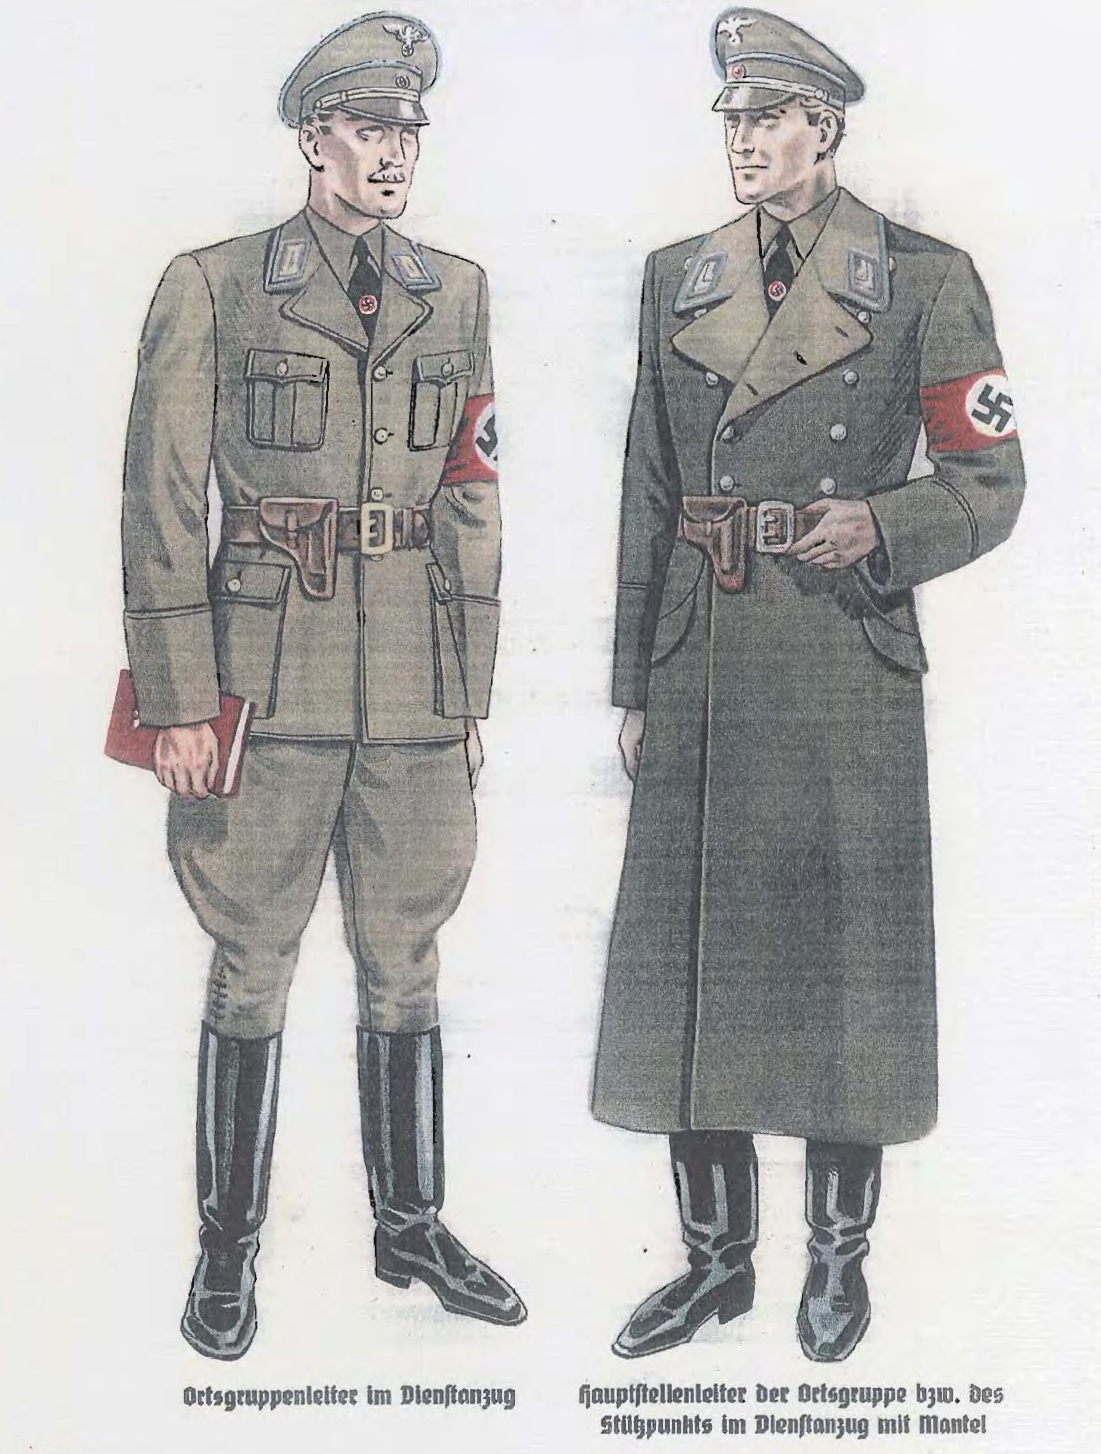 Tall Boots In Art: Nazi uniforms